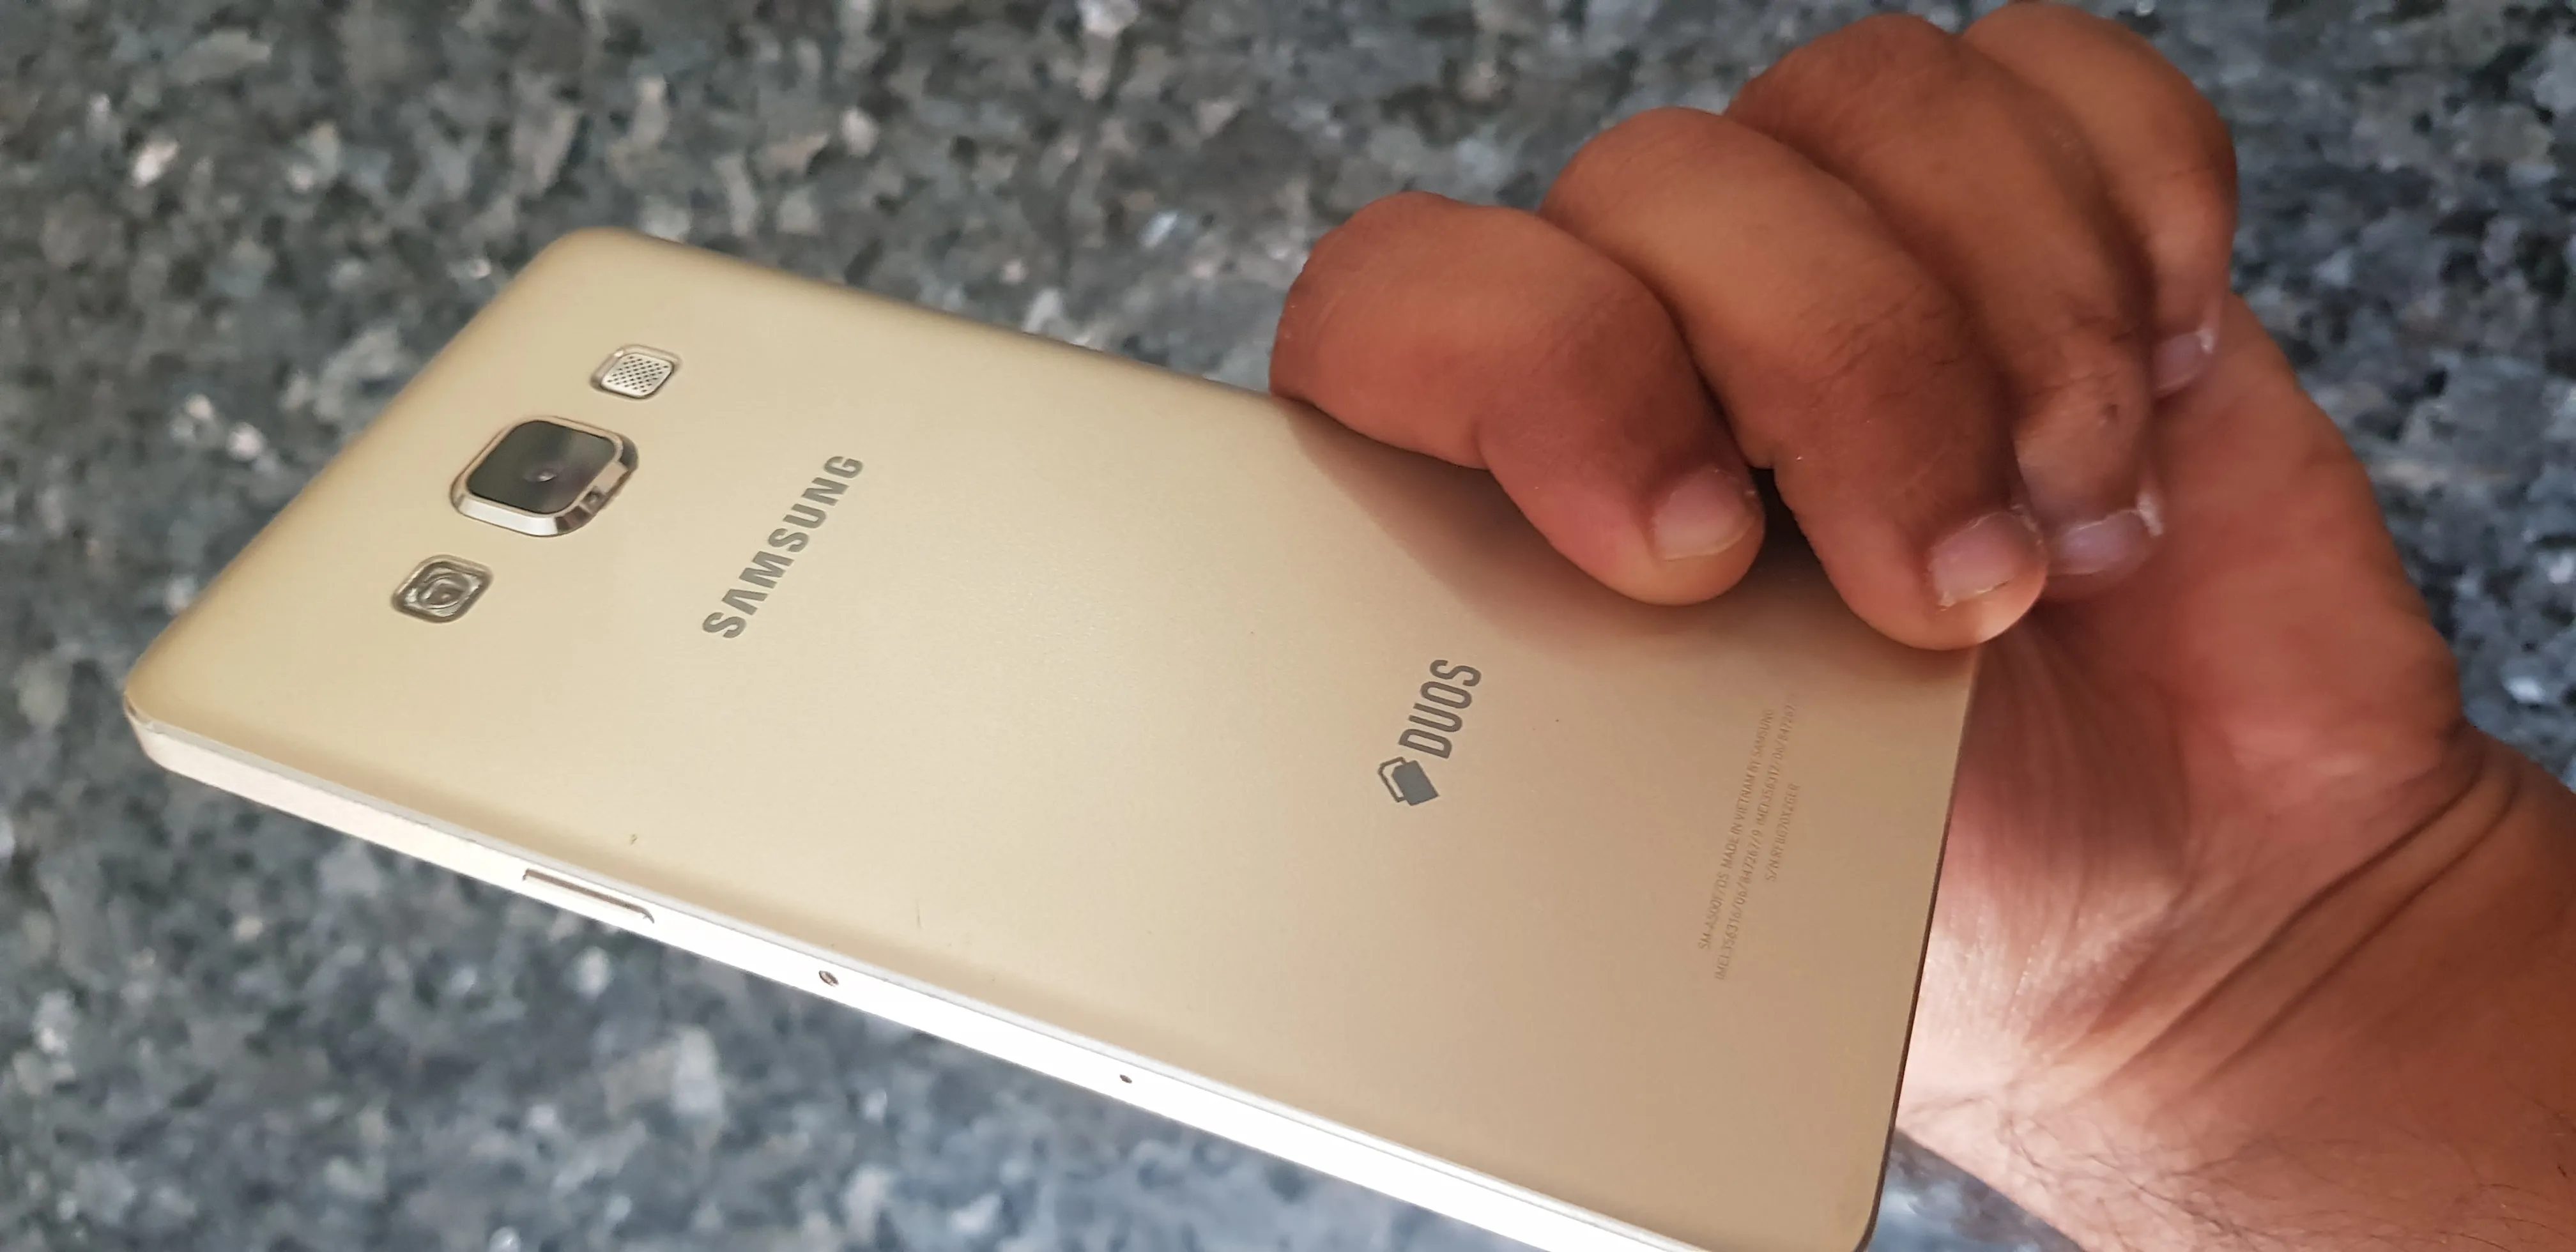 Samsung Galaxy GALAXY A5 9/10 rare gold colour mint condition - photo 2